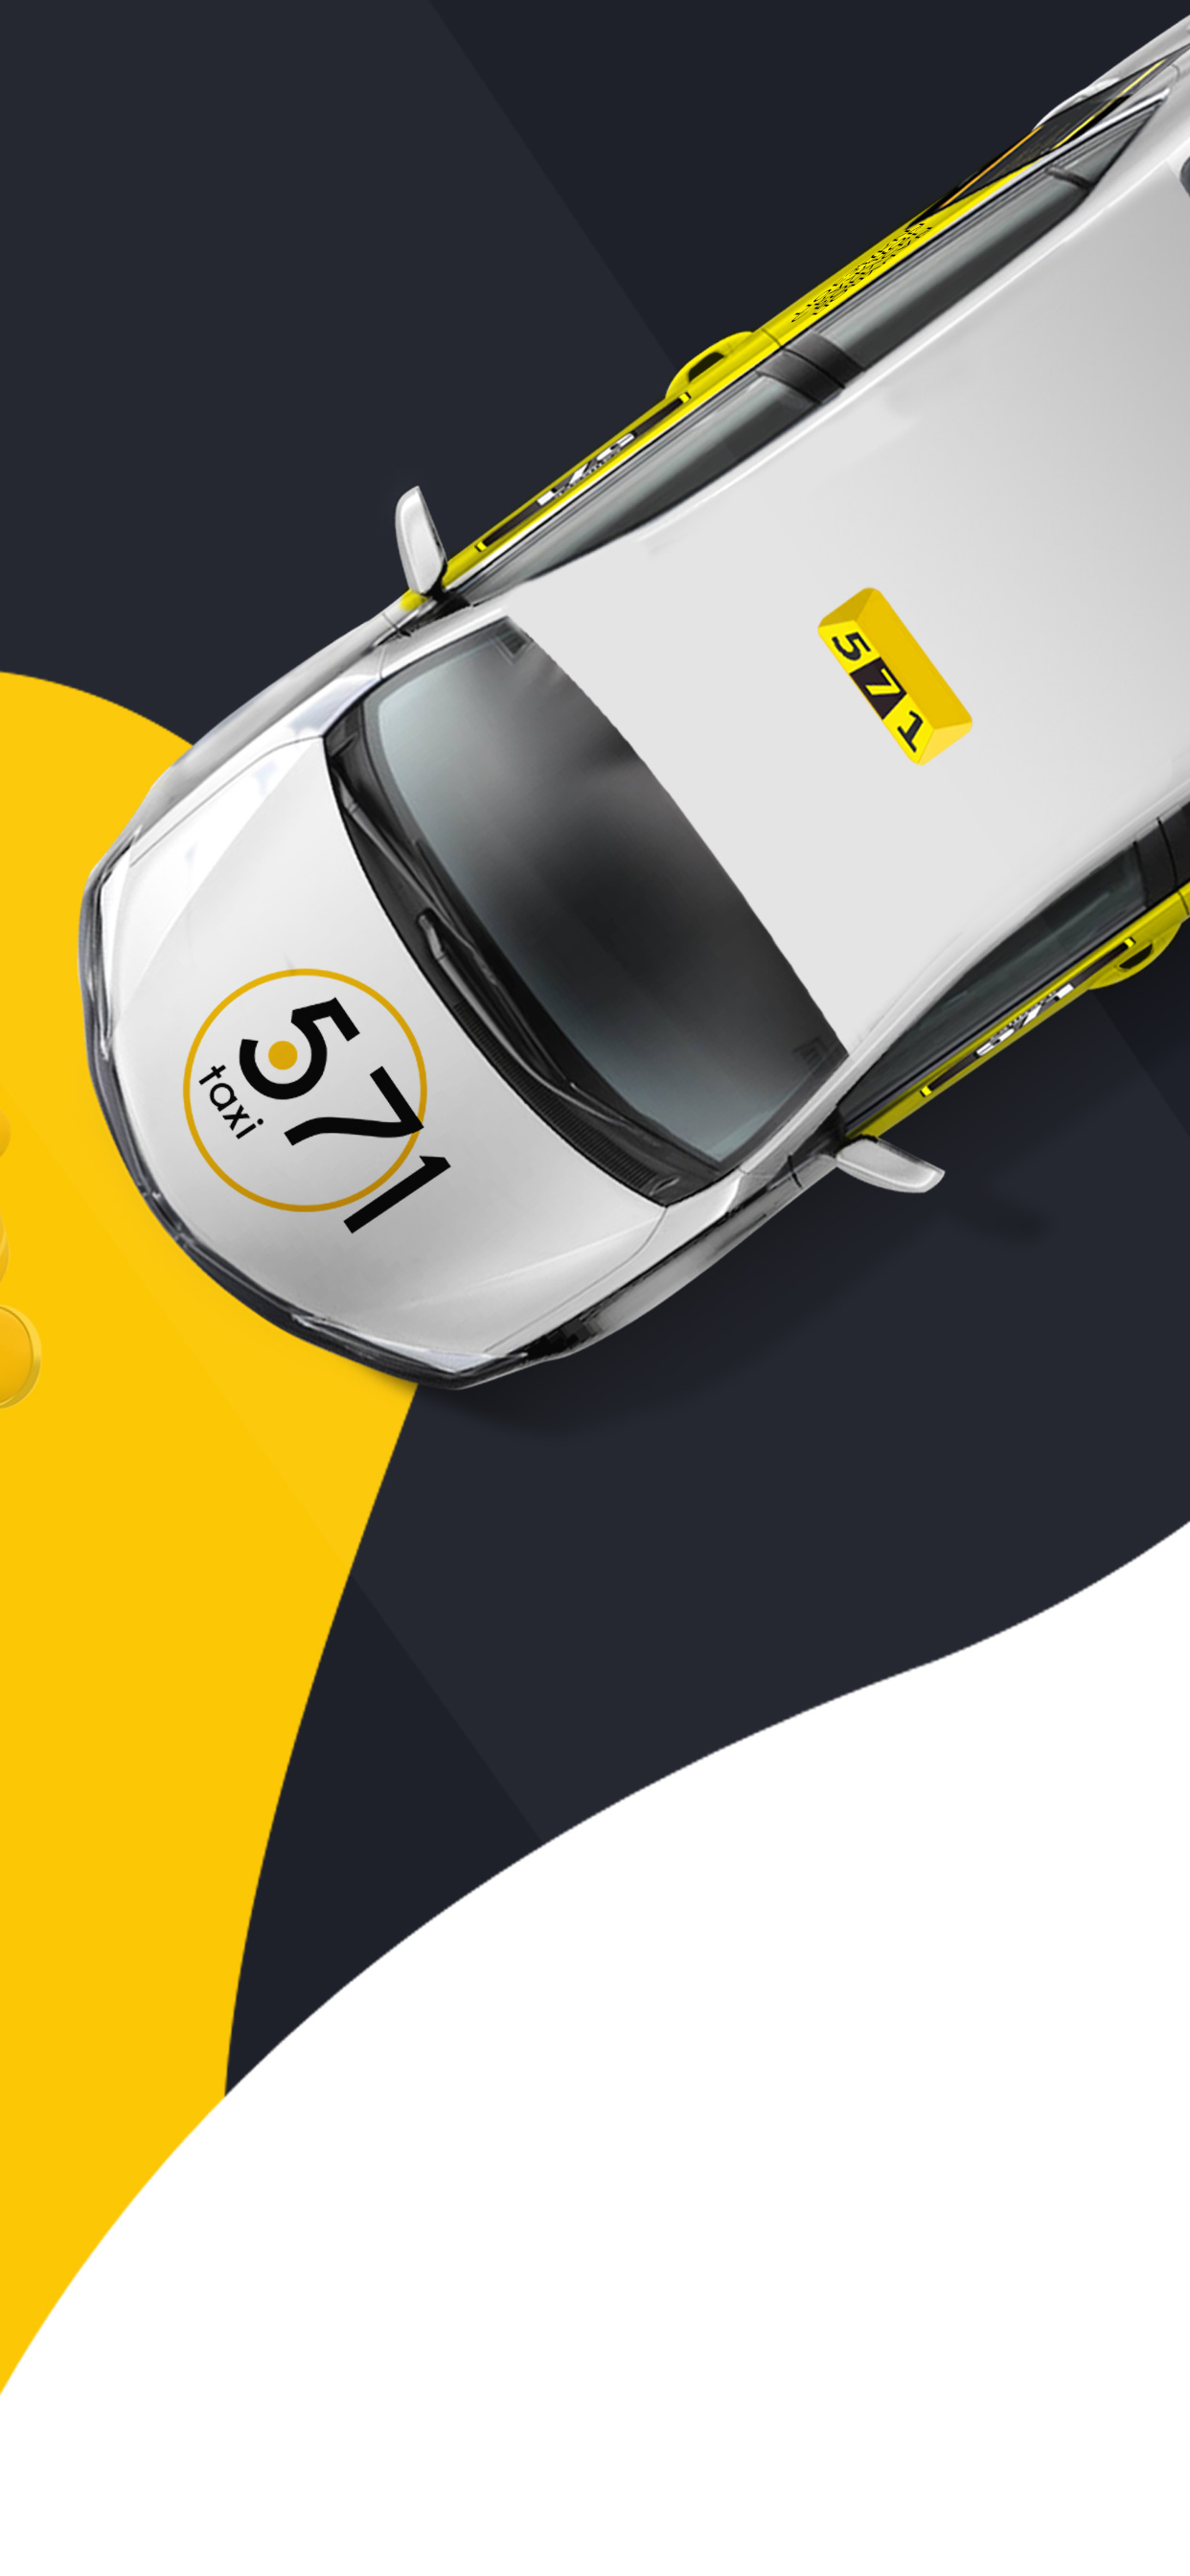 Android application Такси 571- заказ такси в Киеве screenshort